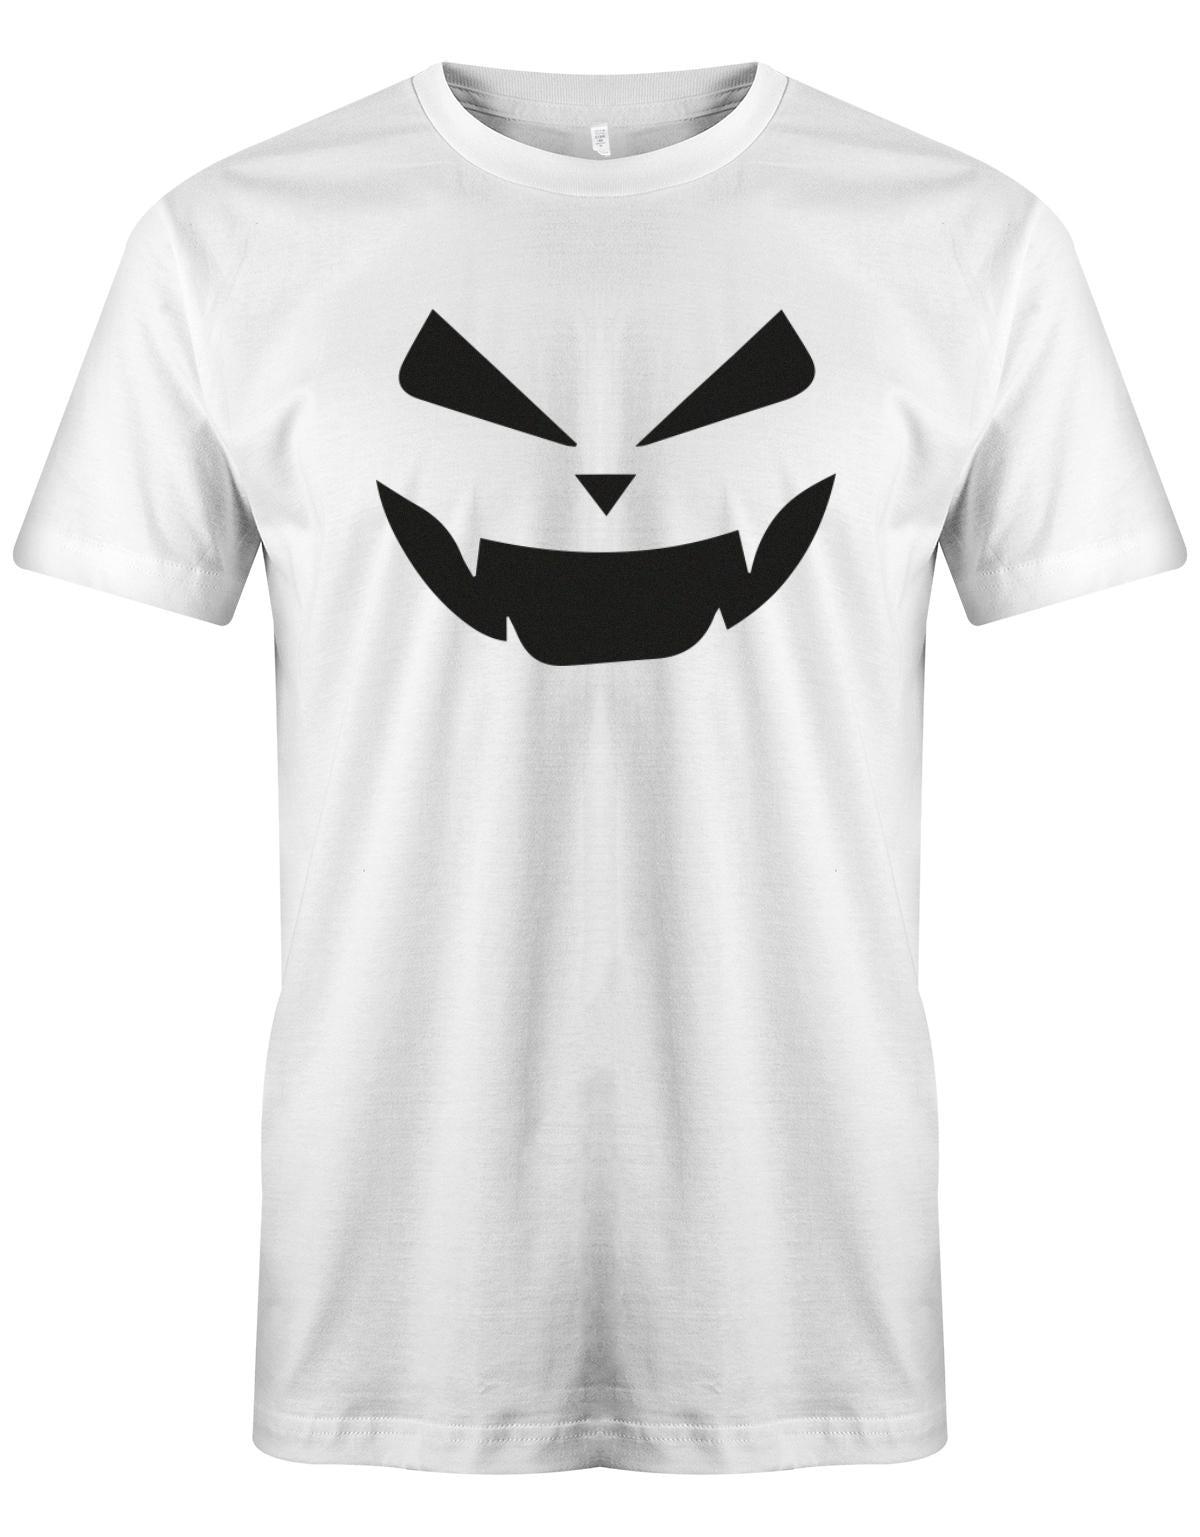 Bad-Ghost-Shirt-Geist-Halloween-Herren-Weiss